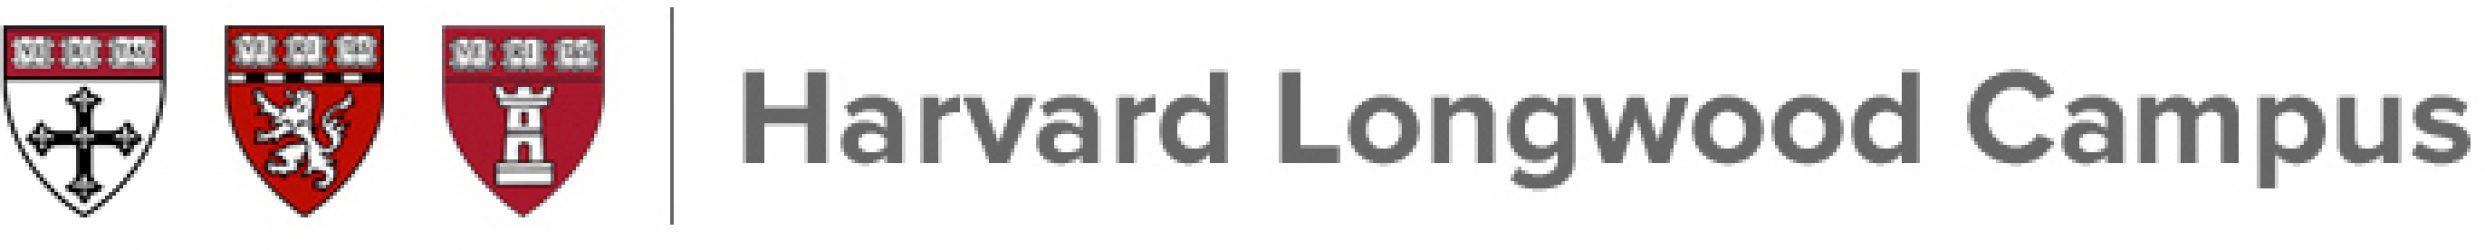 Harvard Longwood Campus Logo